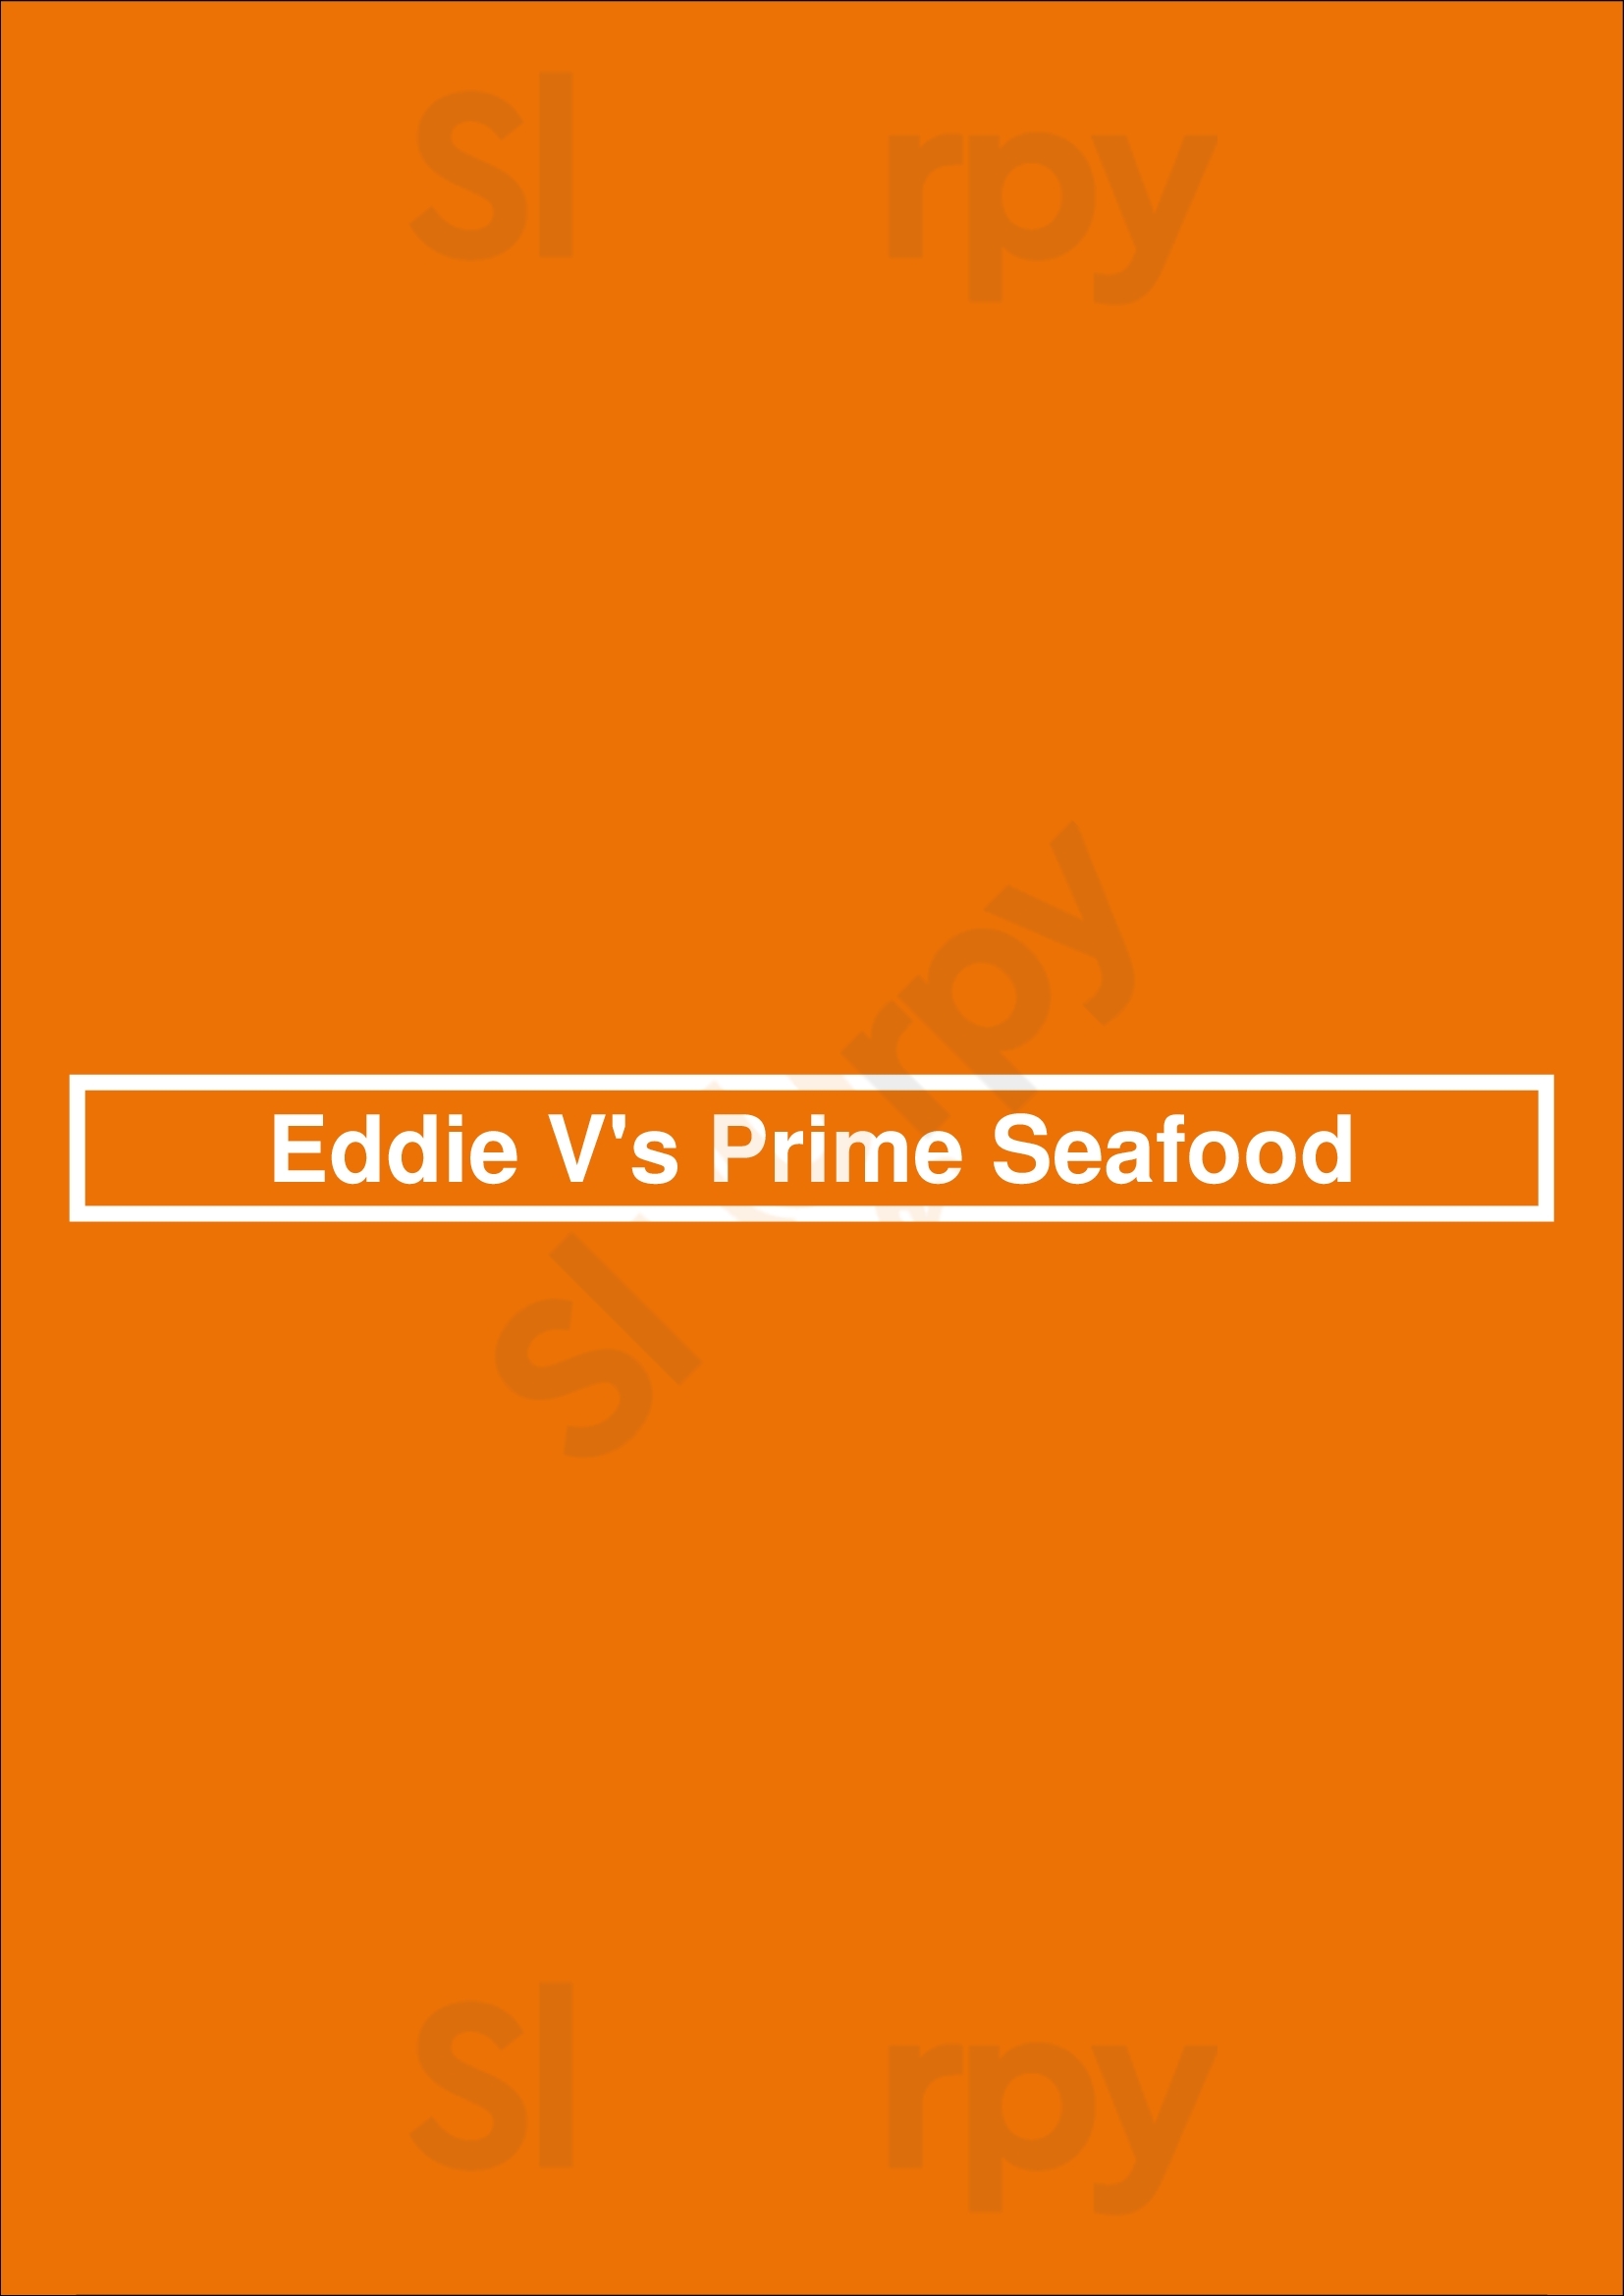 Eddie V's Prime Seafood Dallas Menu - 1